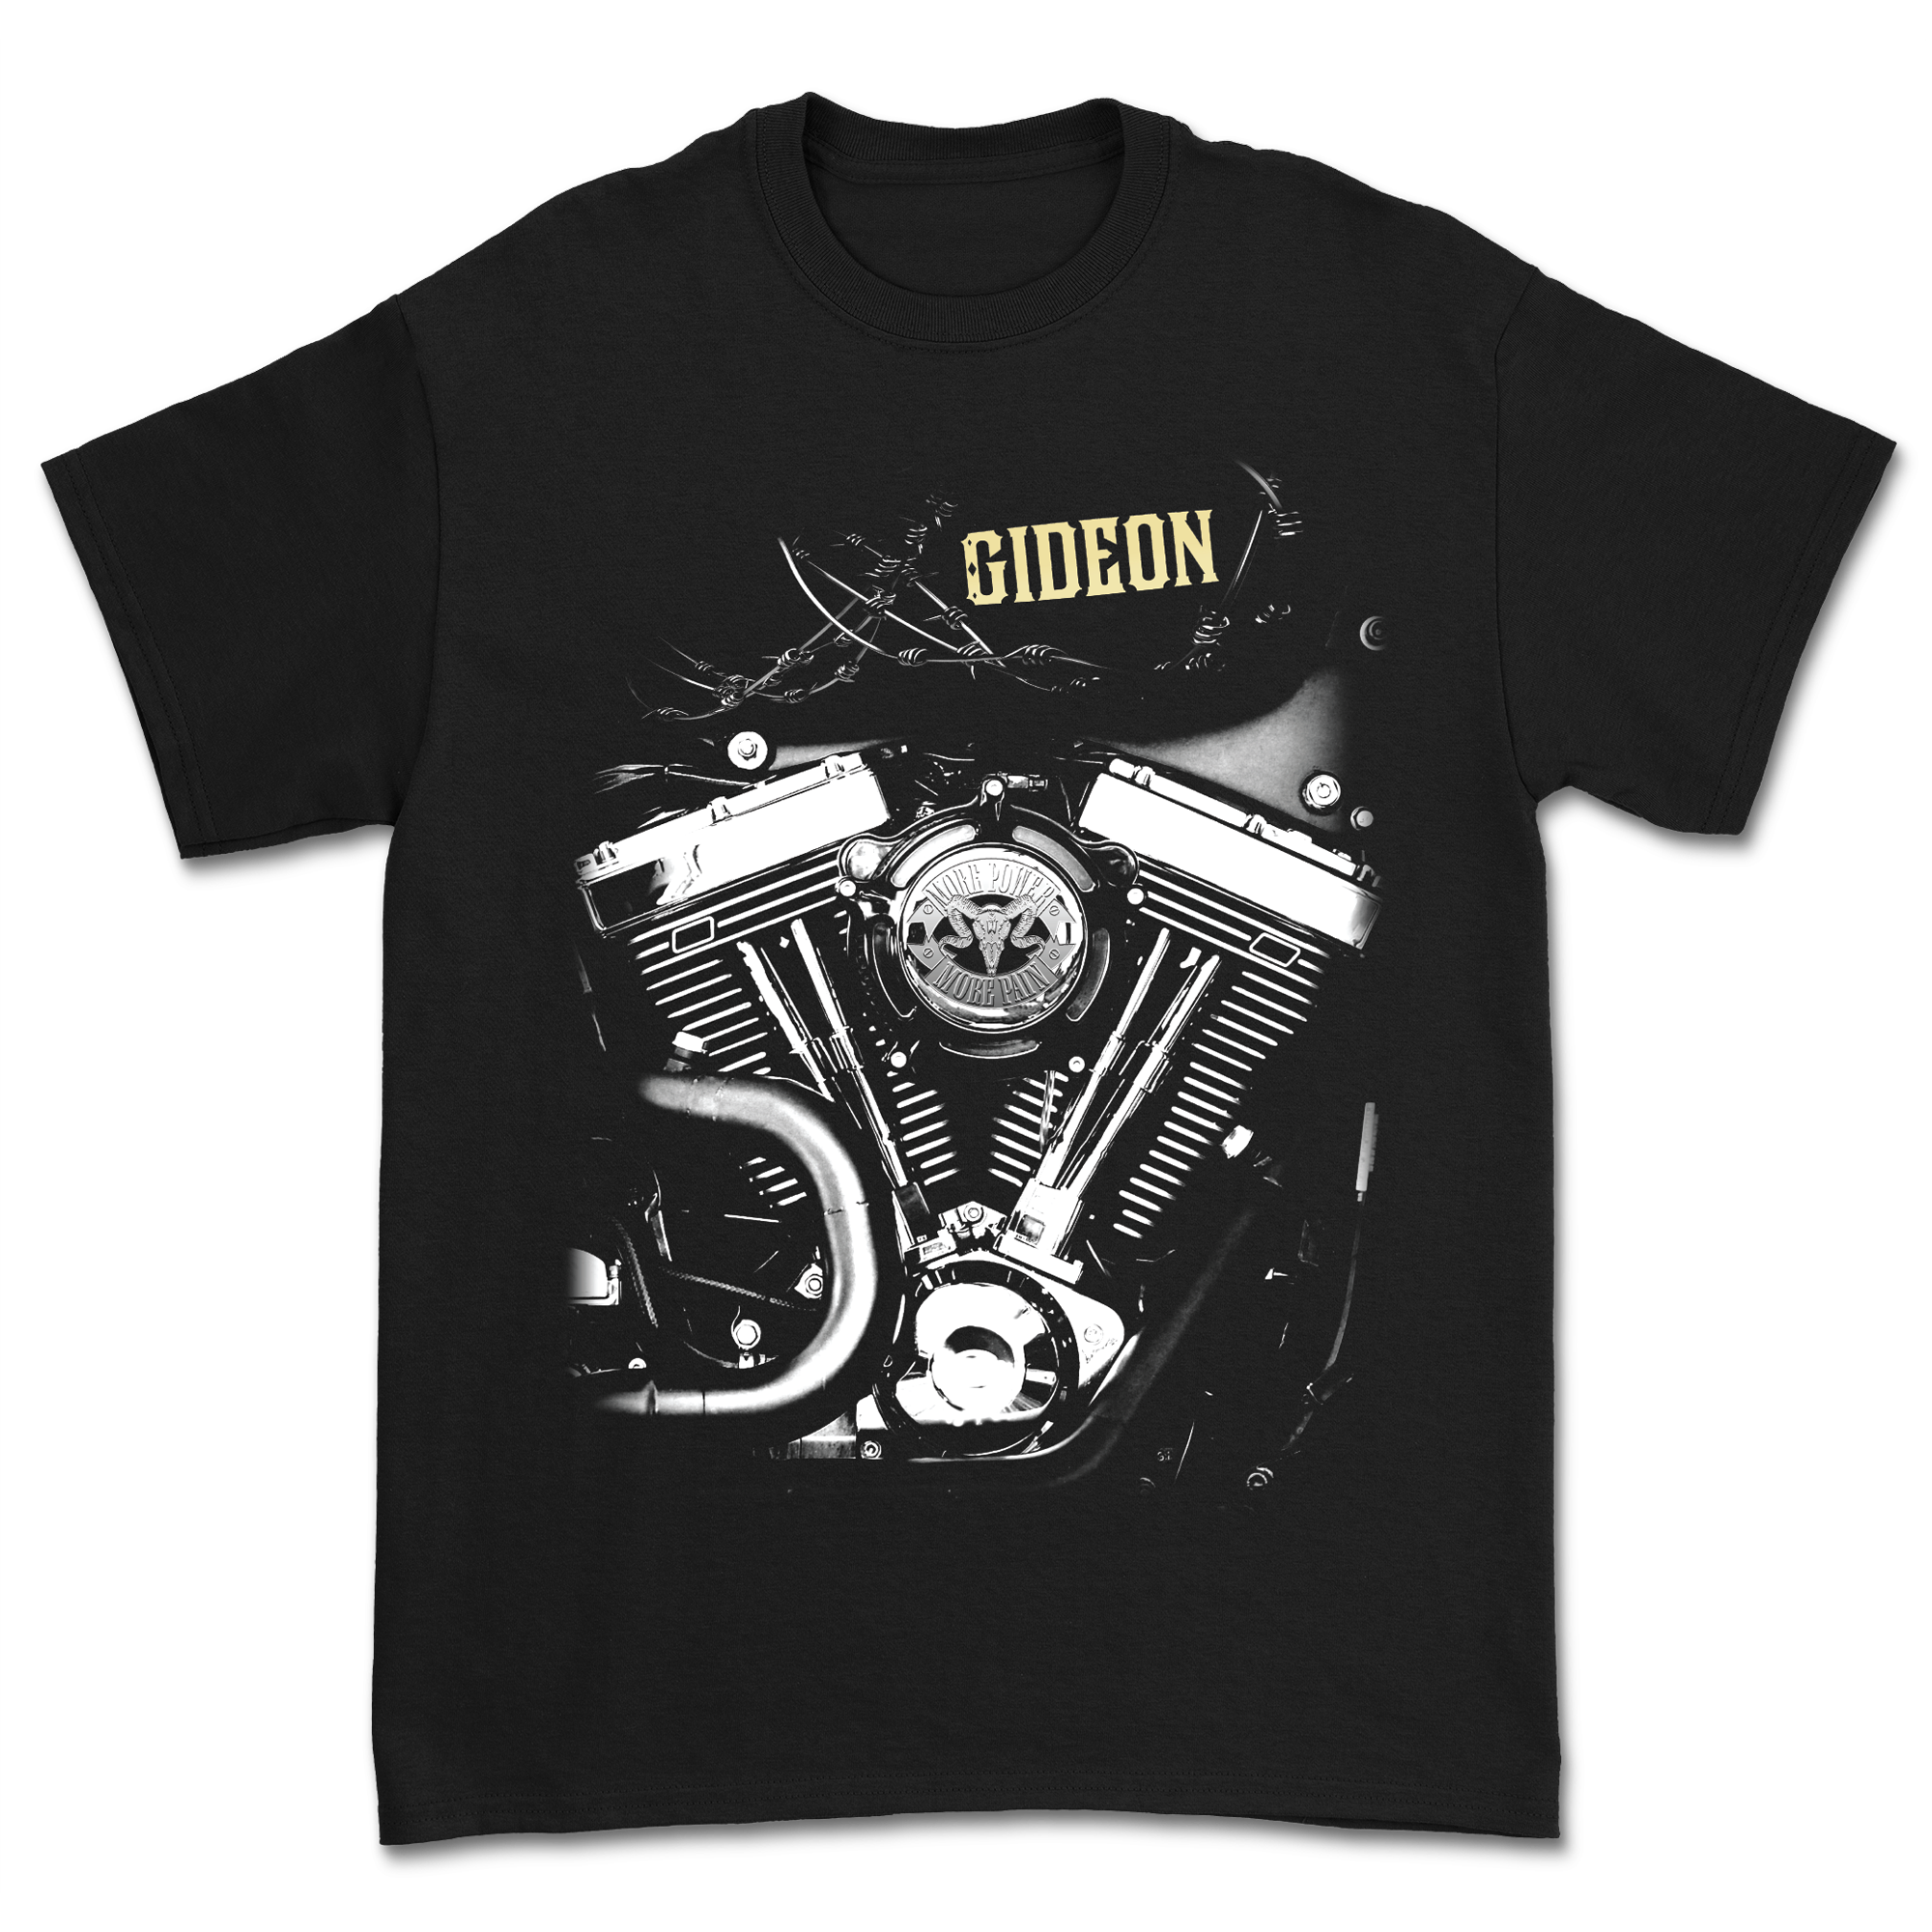 Gideon - Cowboys T-Shirt